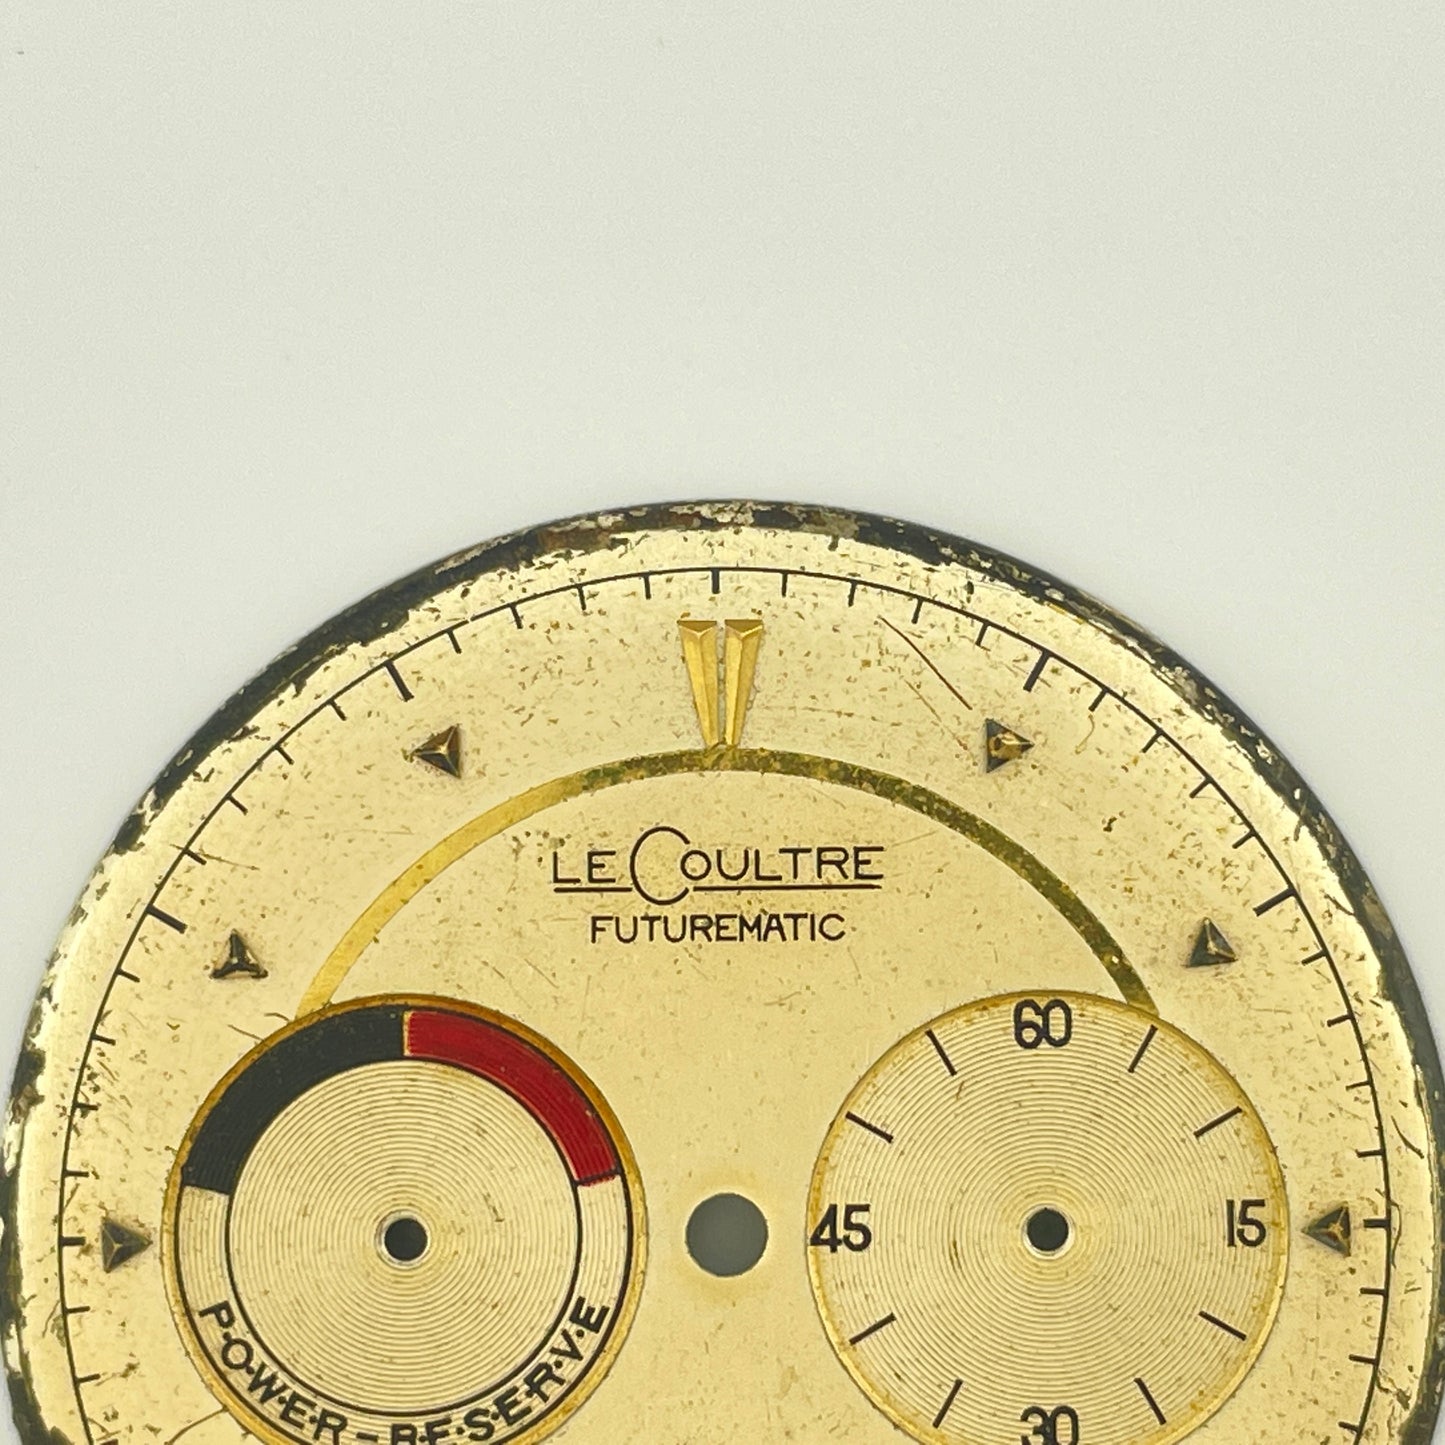 LeCoultre Futurematic Genuine Factory Wristwatch Dial